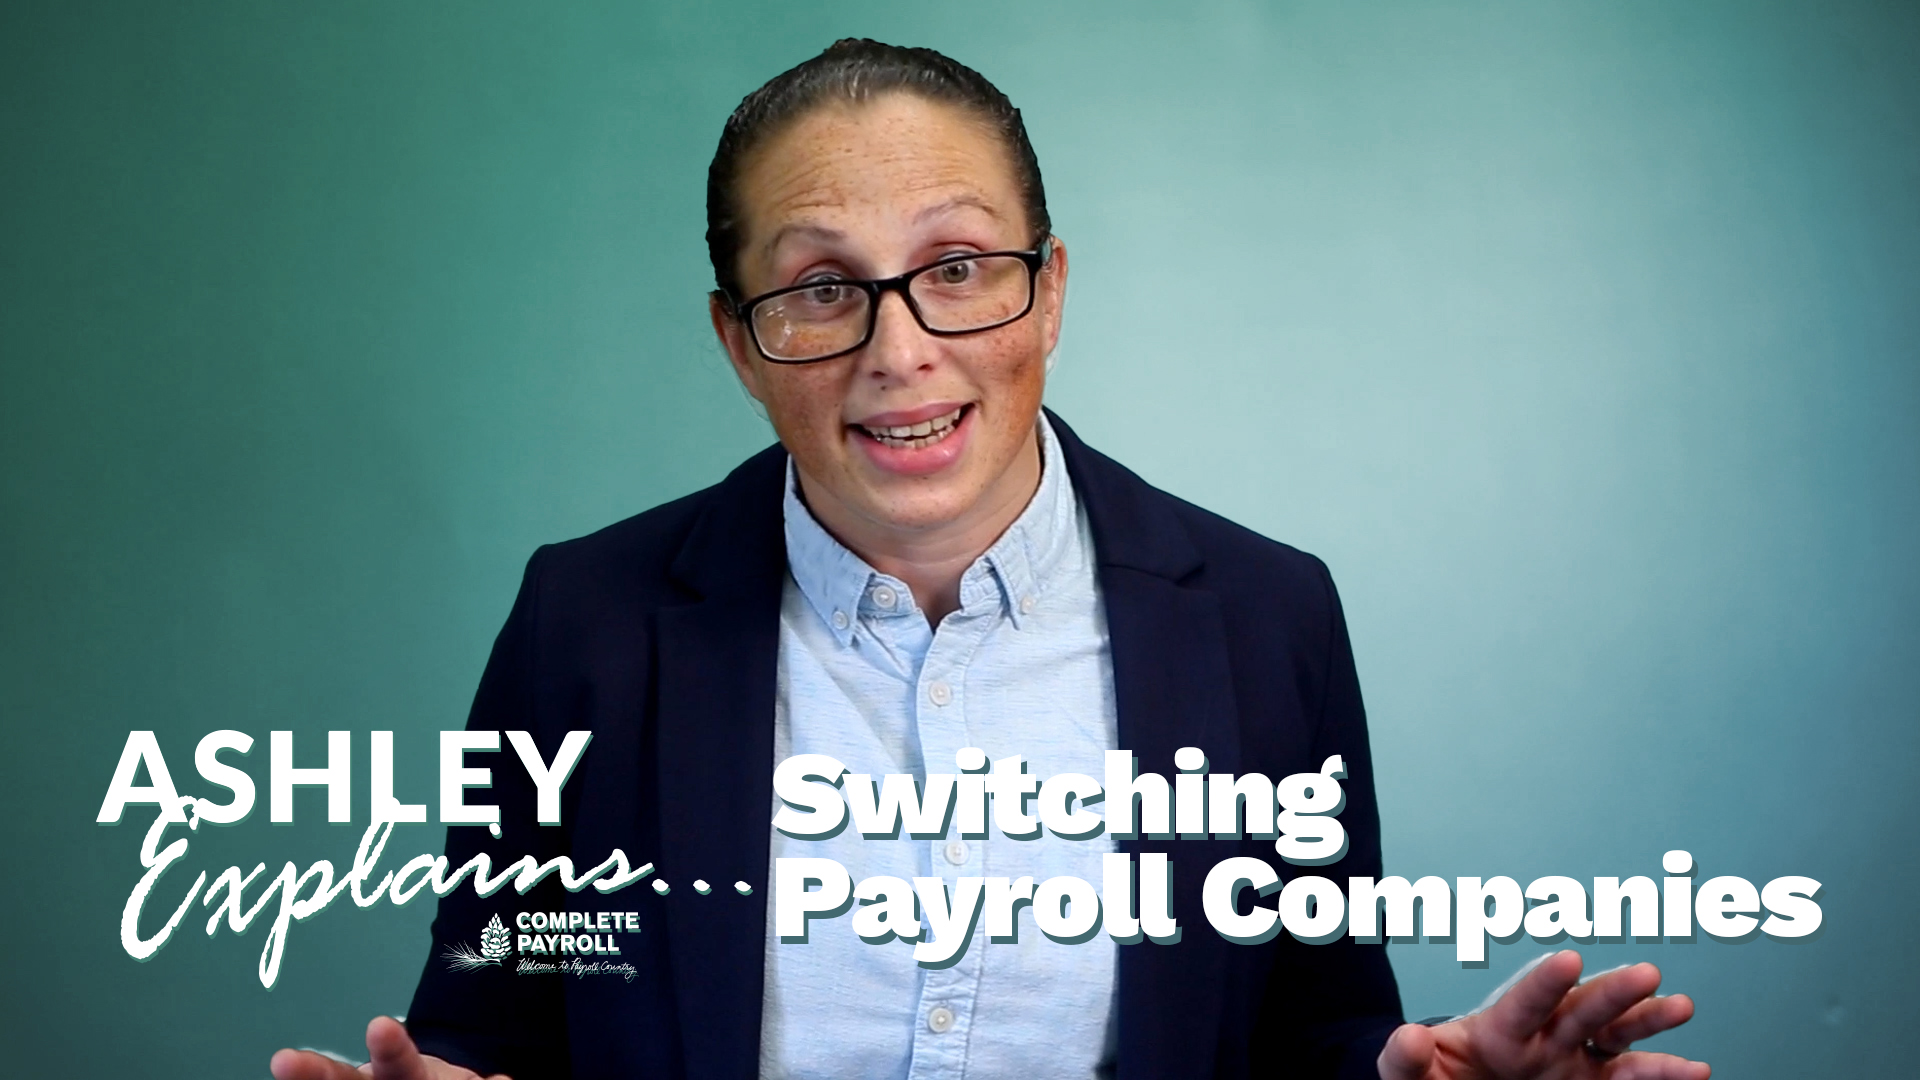 Ashley Explains Switching Payroll Companies